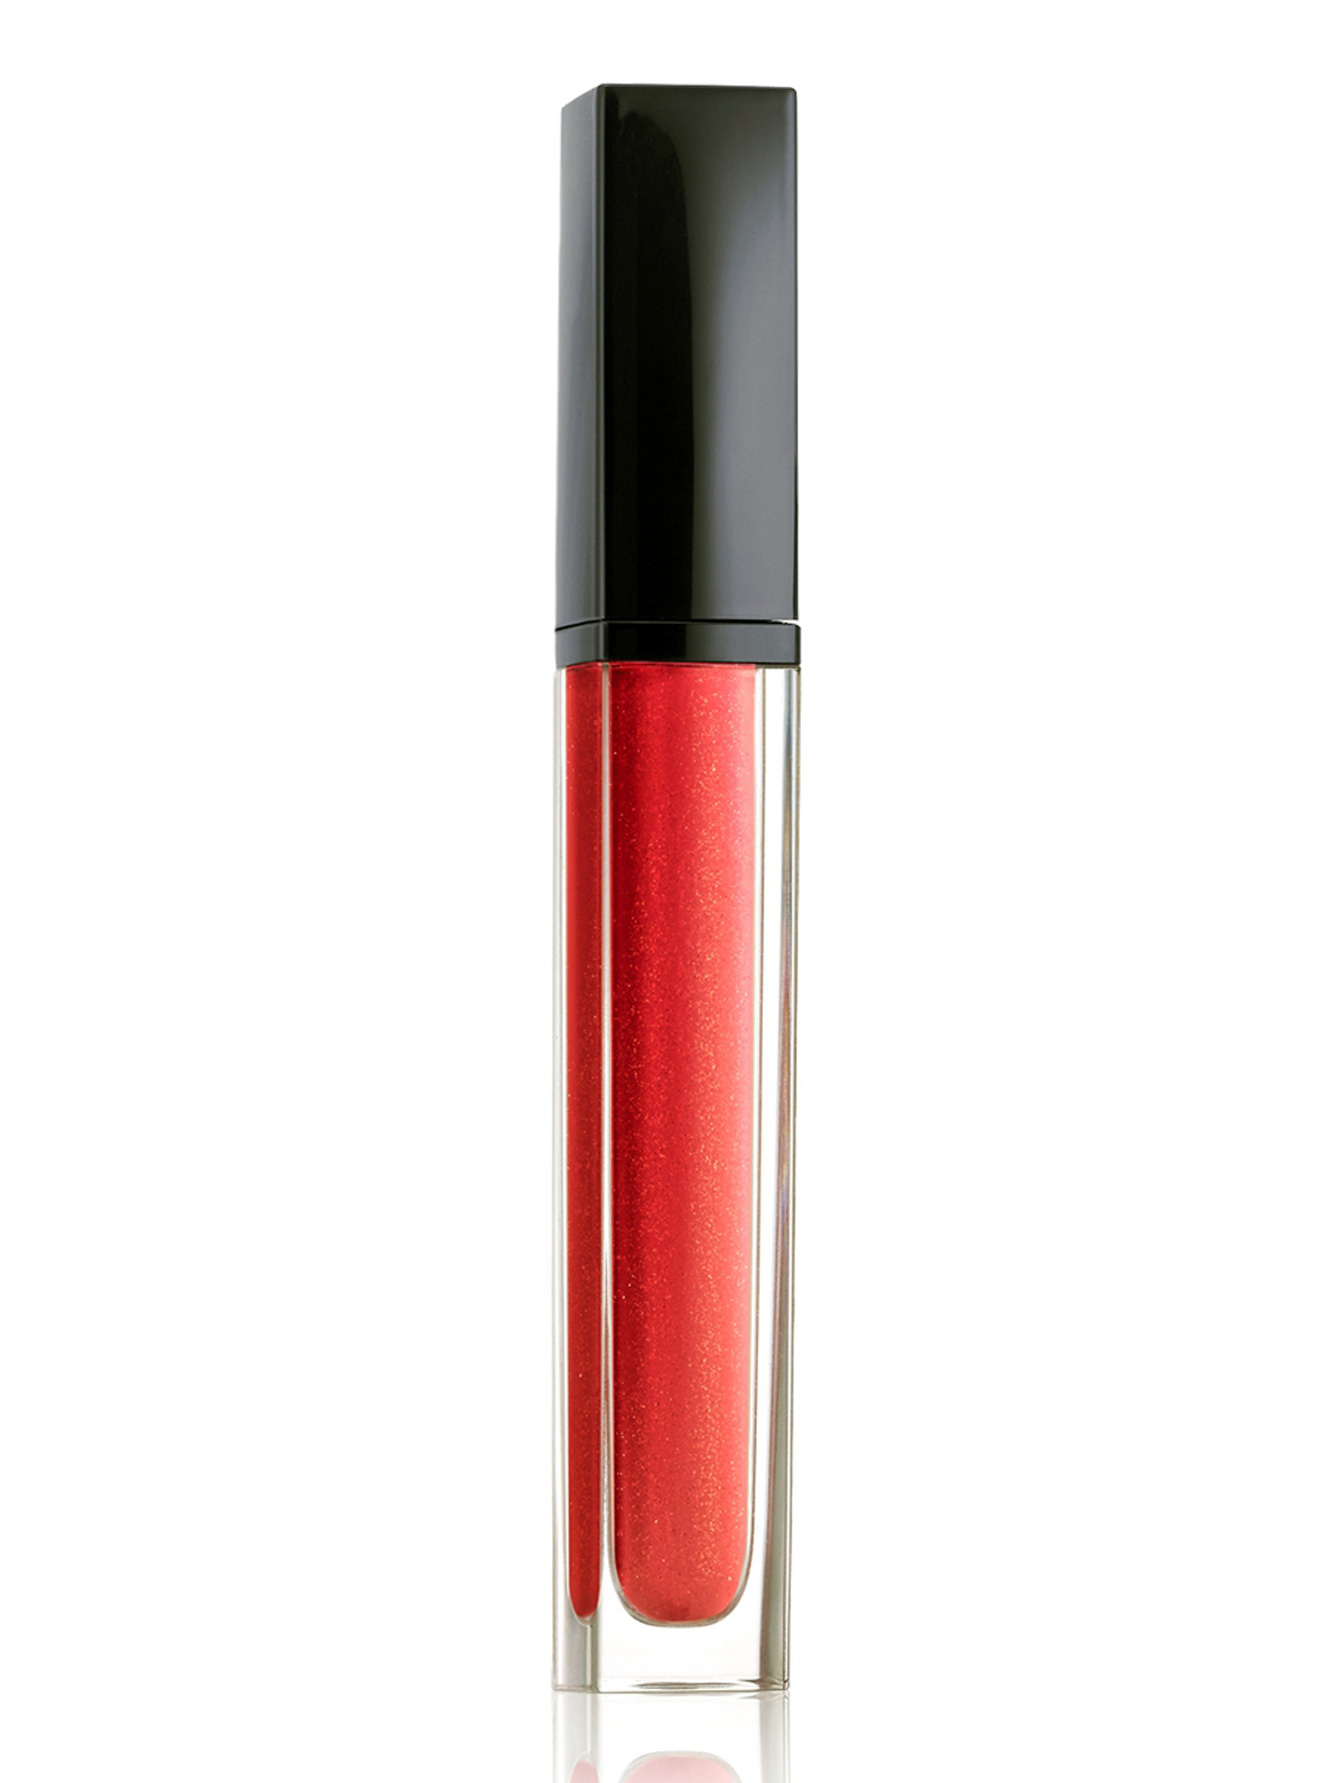  Лак для губ - №360 Wicked Apple, Pure Color Gloss - Общий вид